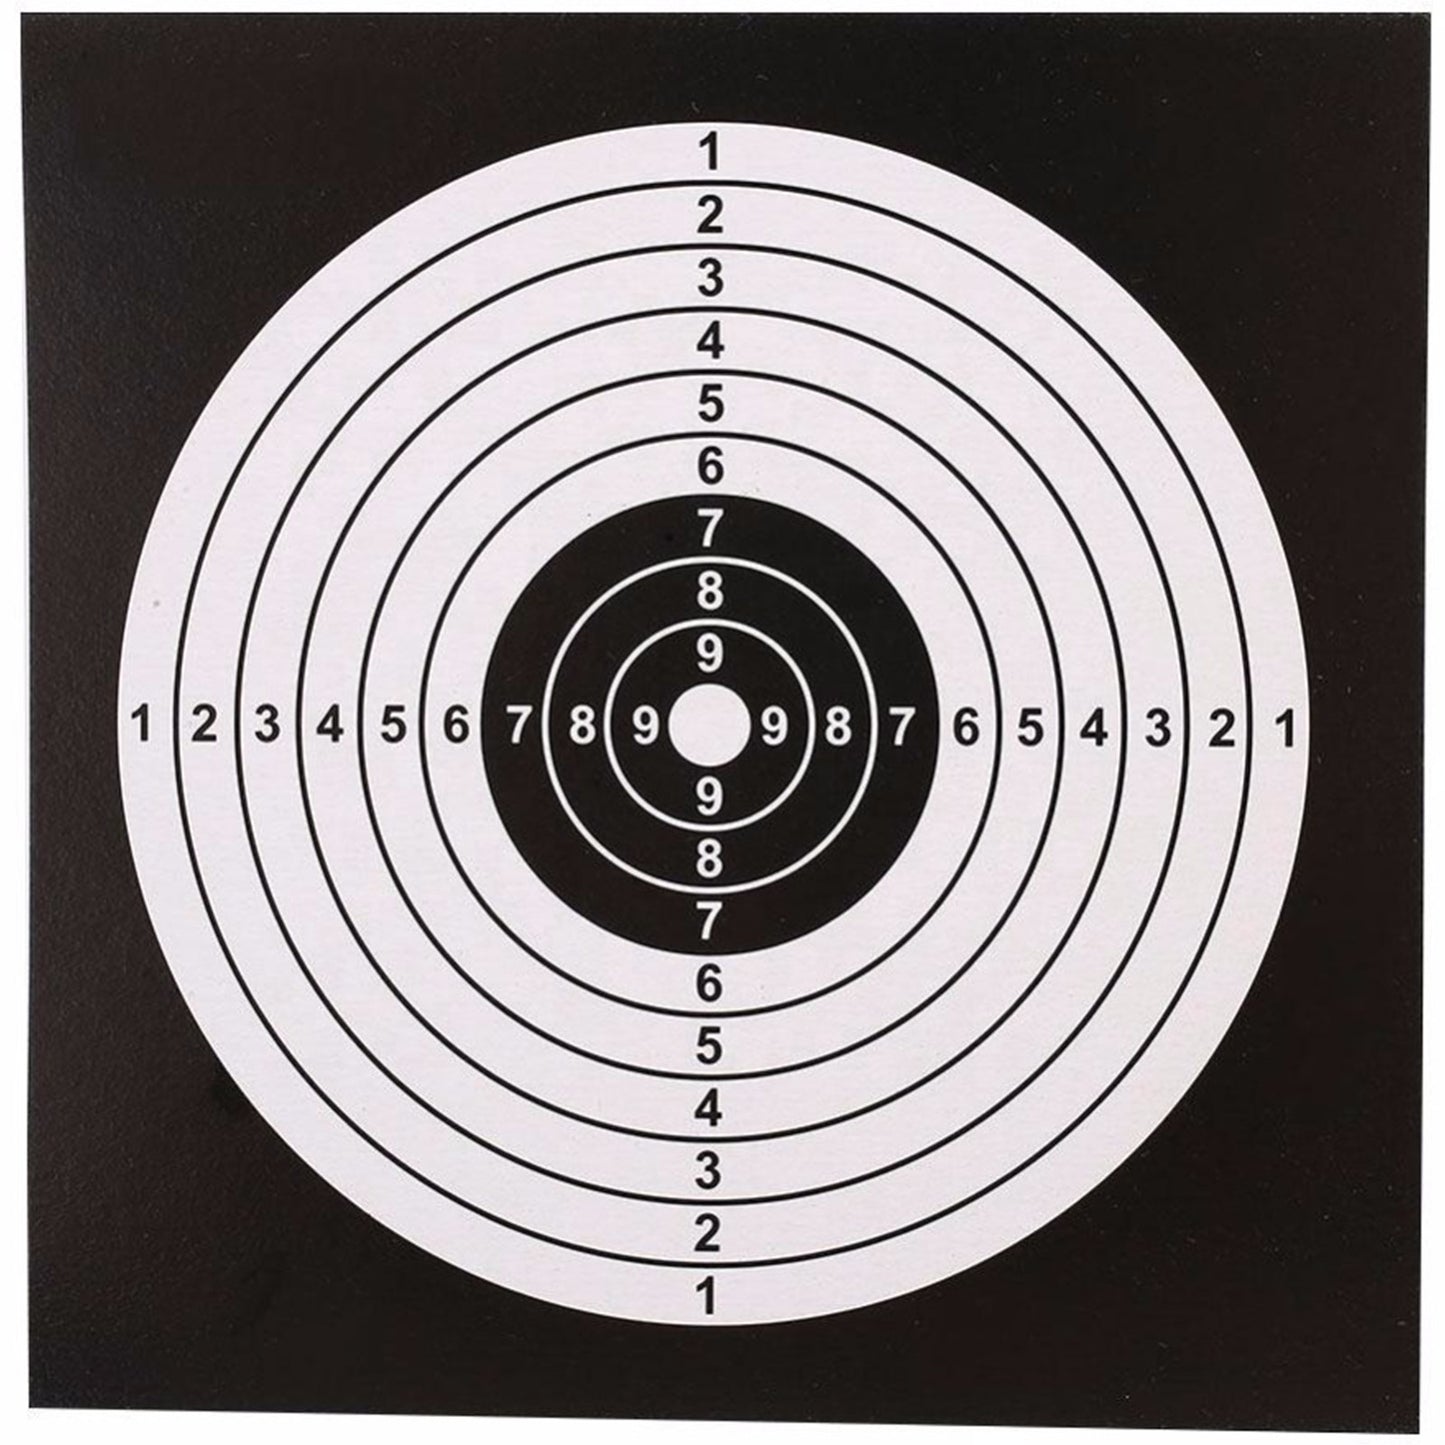 Atflbox 5.5 Inch BB Gun Target Papers for Pellet Trap Shooting Target Holder, Pack of 100(Black)